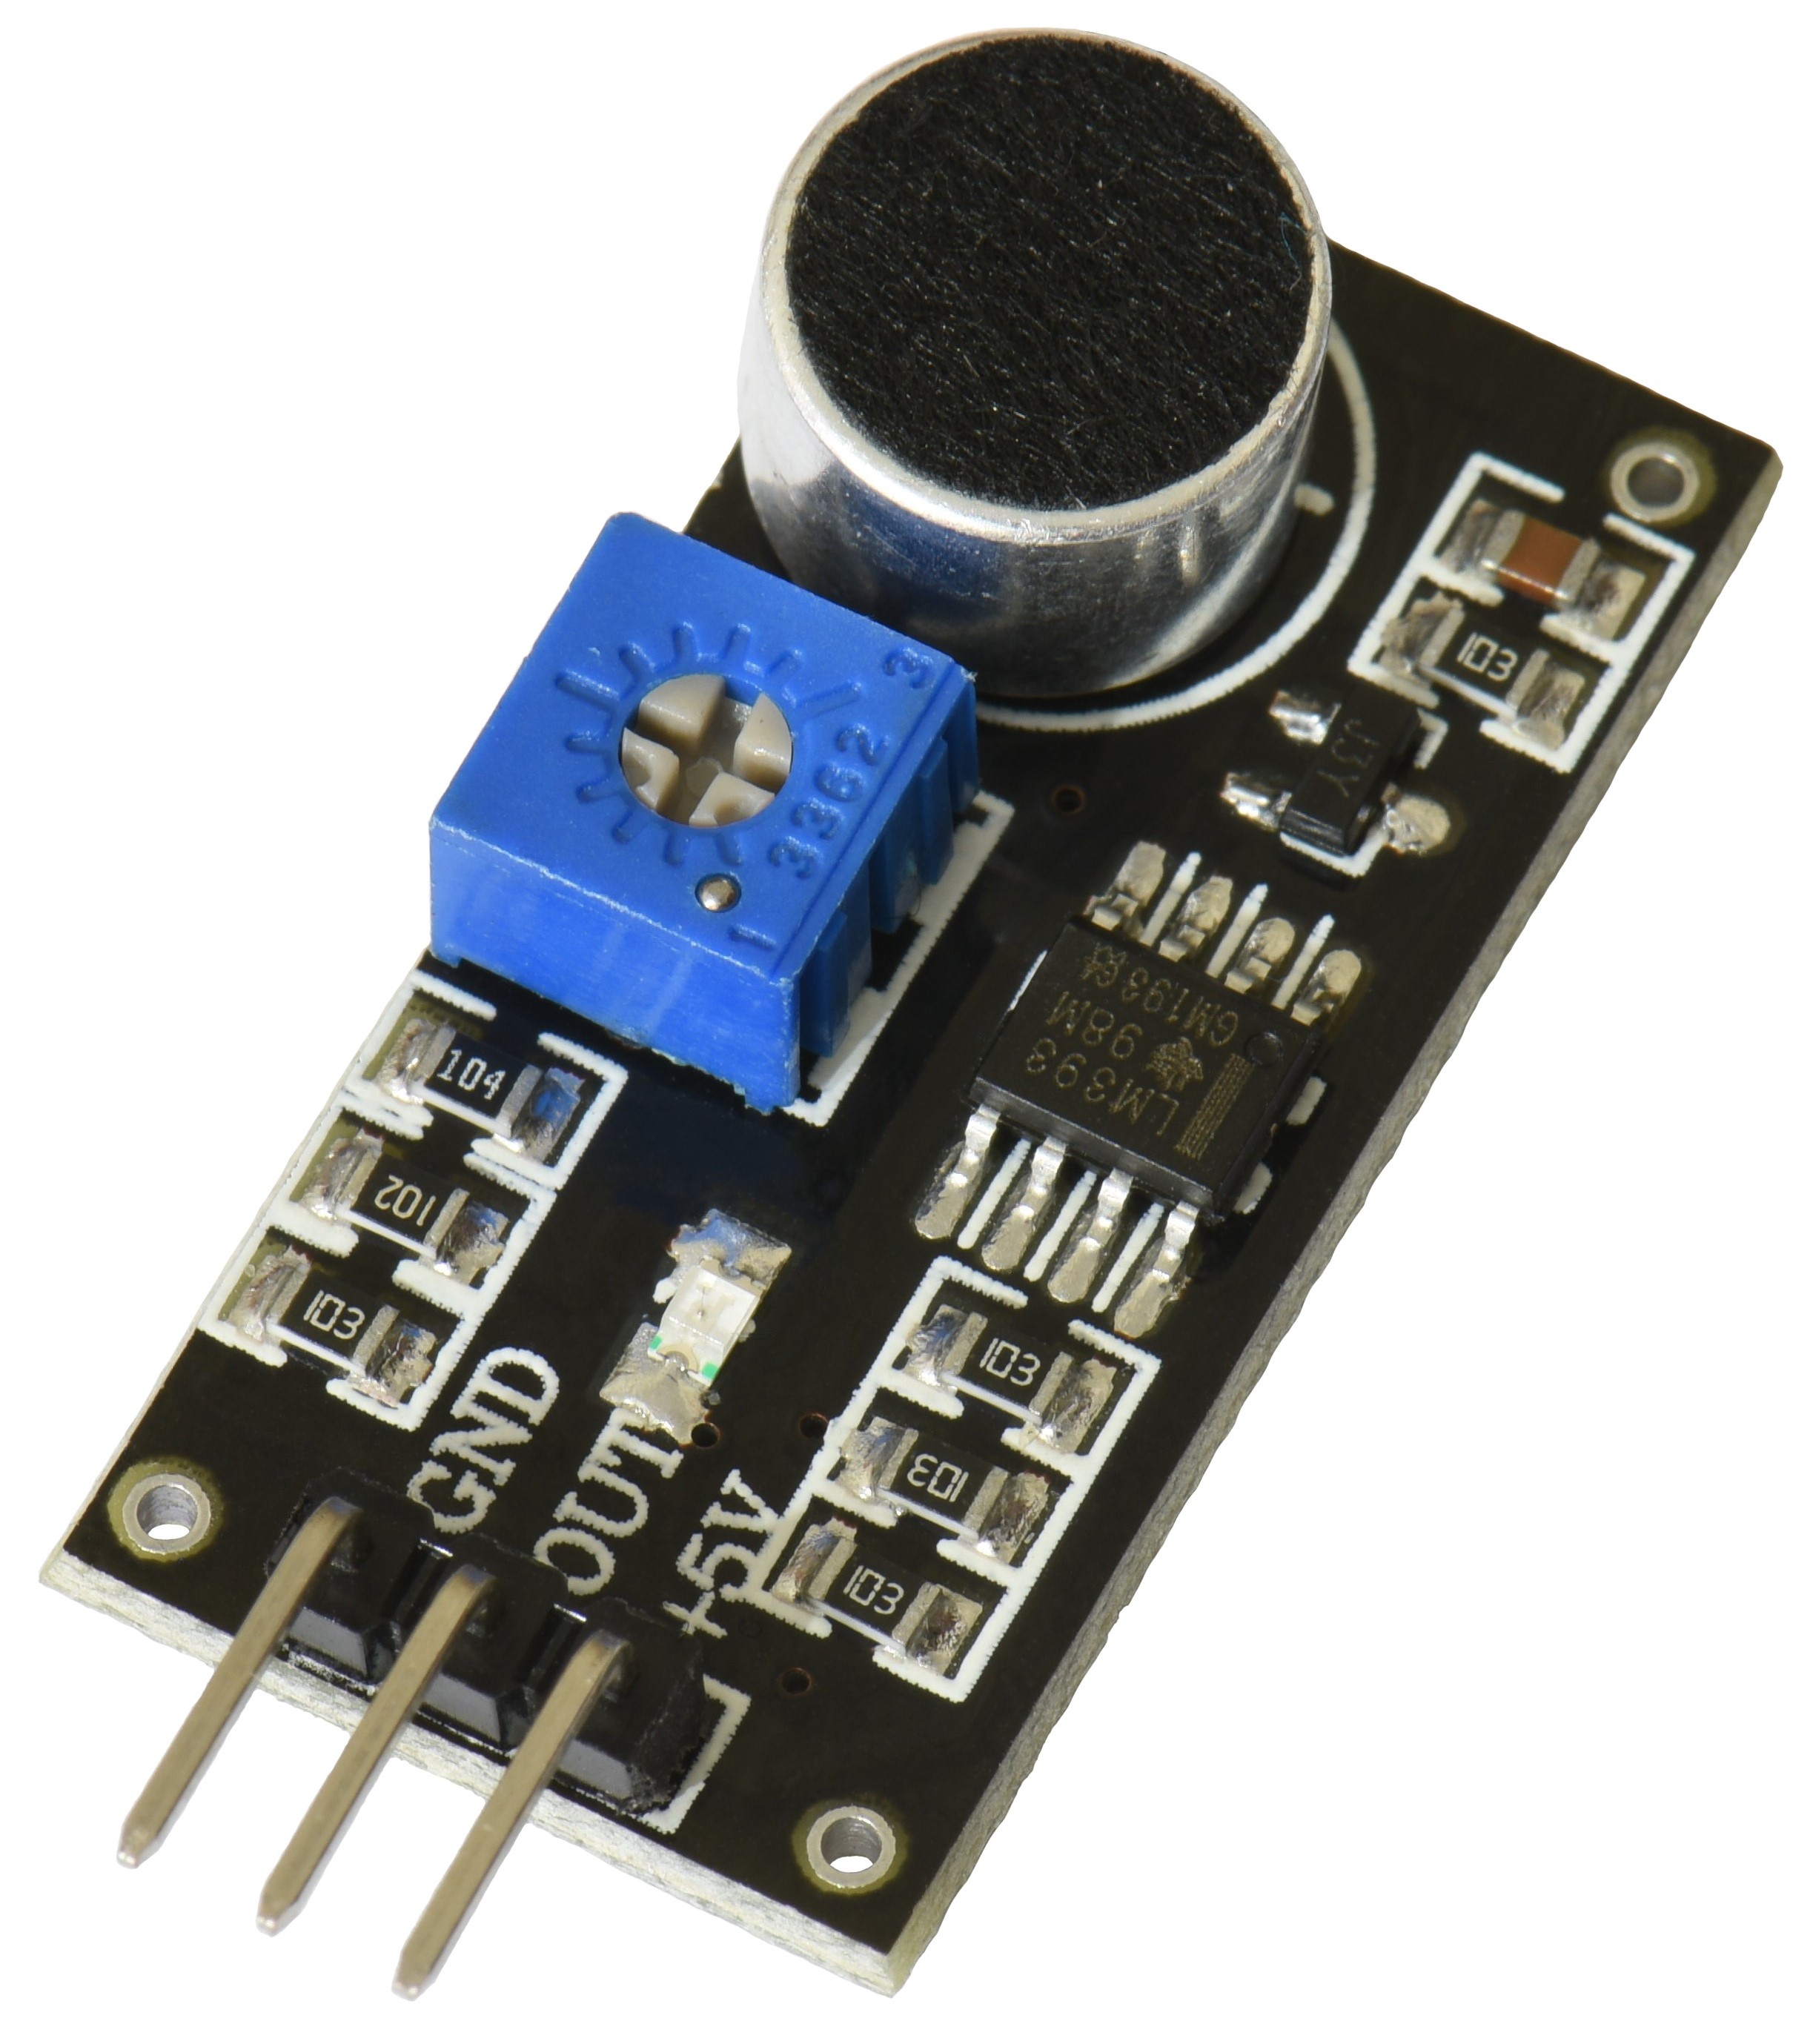 Датчик звука Arduino lm393. Модуль датчик микрофон, lm393. Lm393 модули для ардуино. Микрофонный модуль ФСИ 109. Датчик звука купить